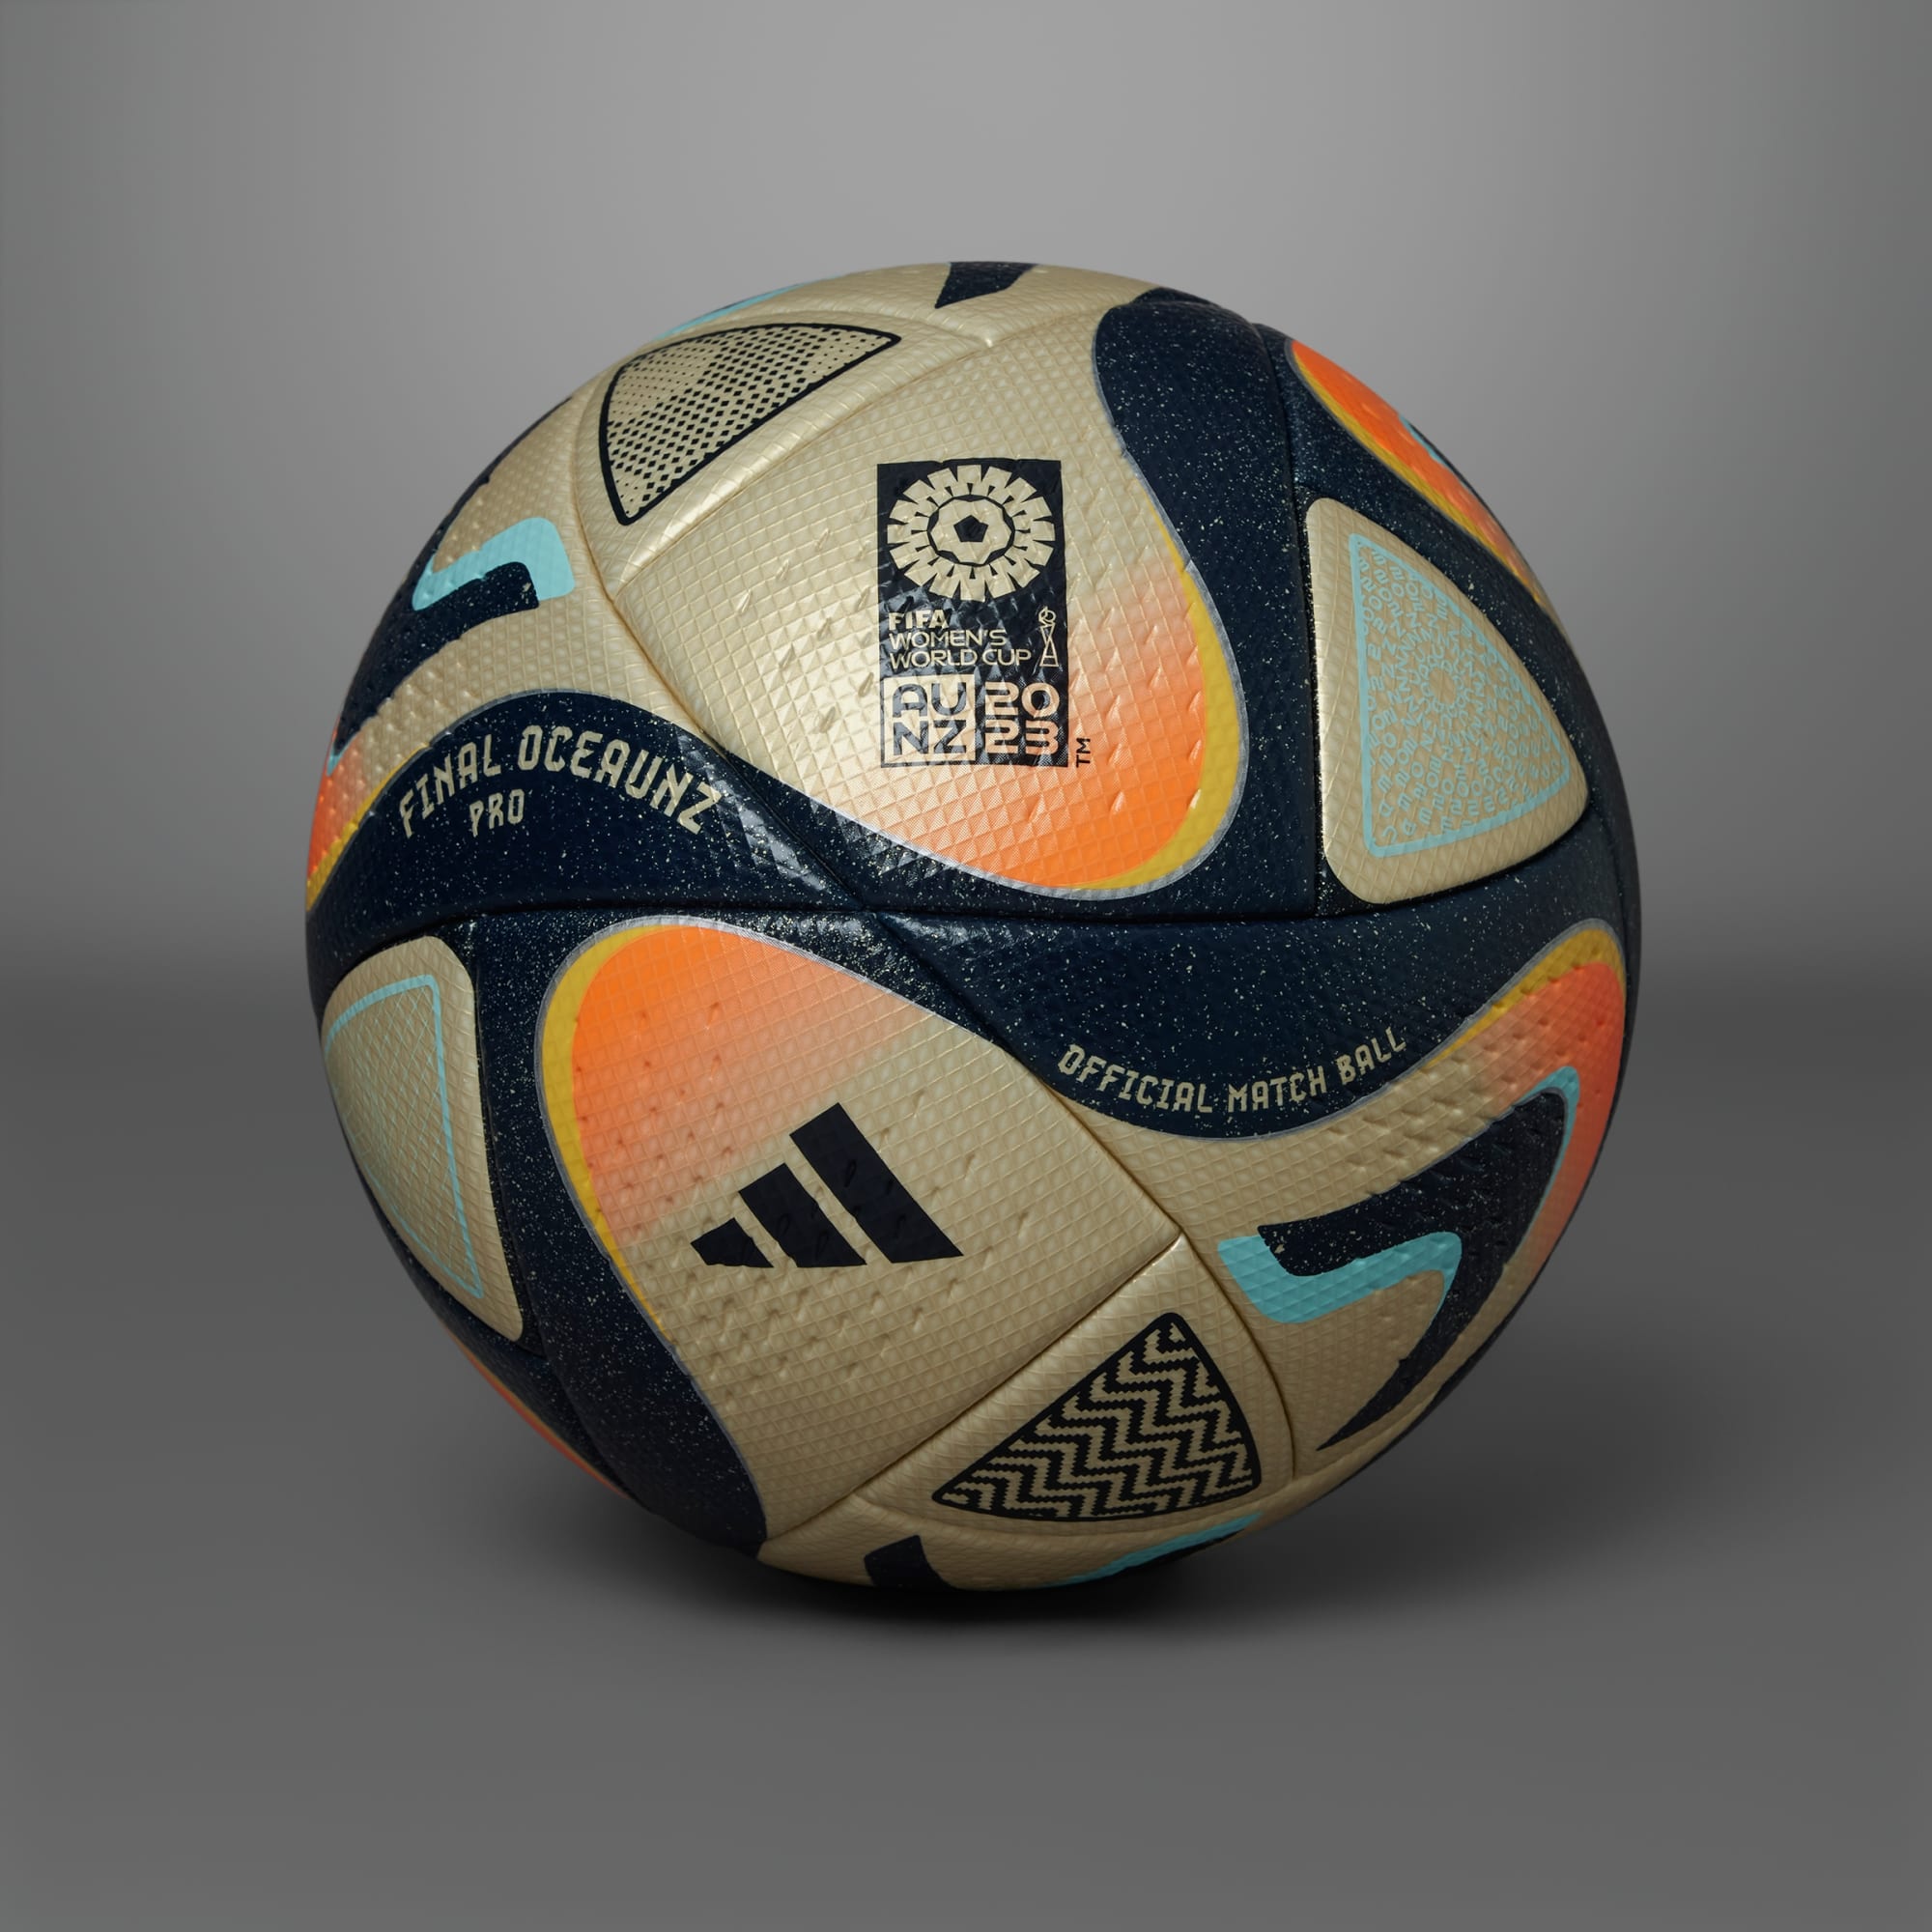 Soccer World Cup Fan Soccer Backpack - Soccer Ball Bag -SIDE SHOE POCKETS!